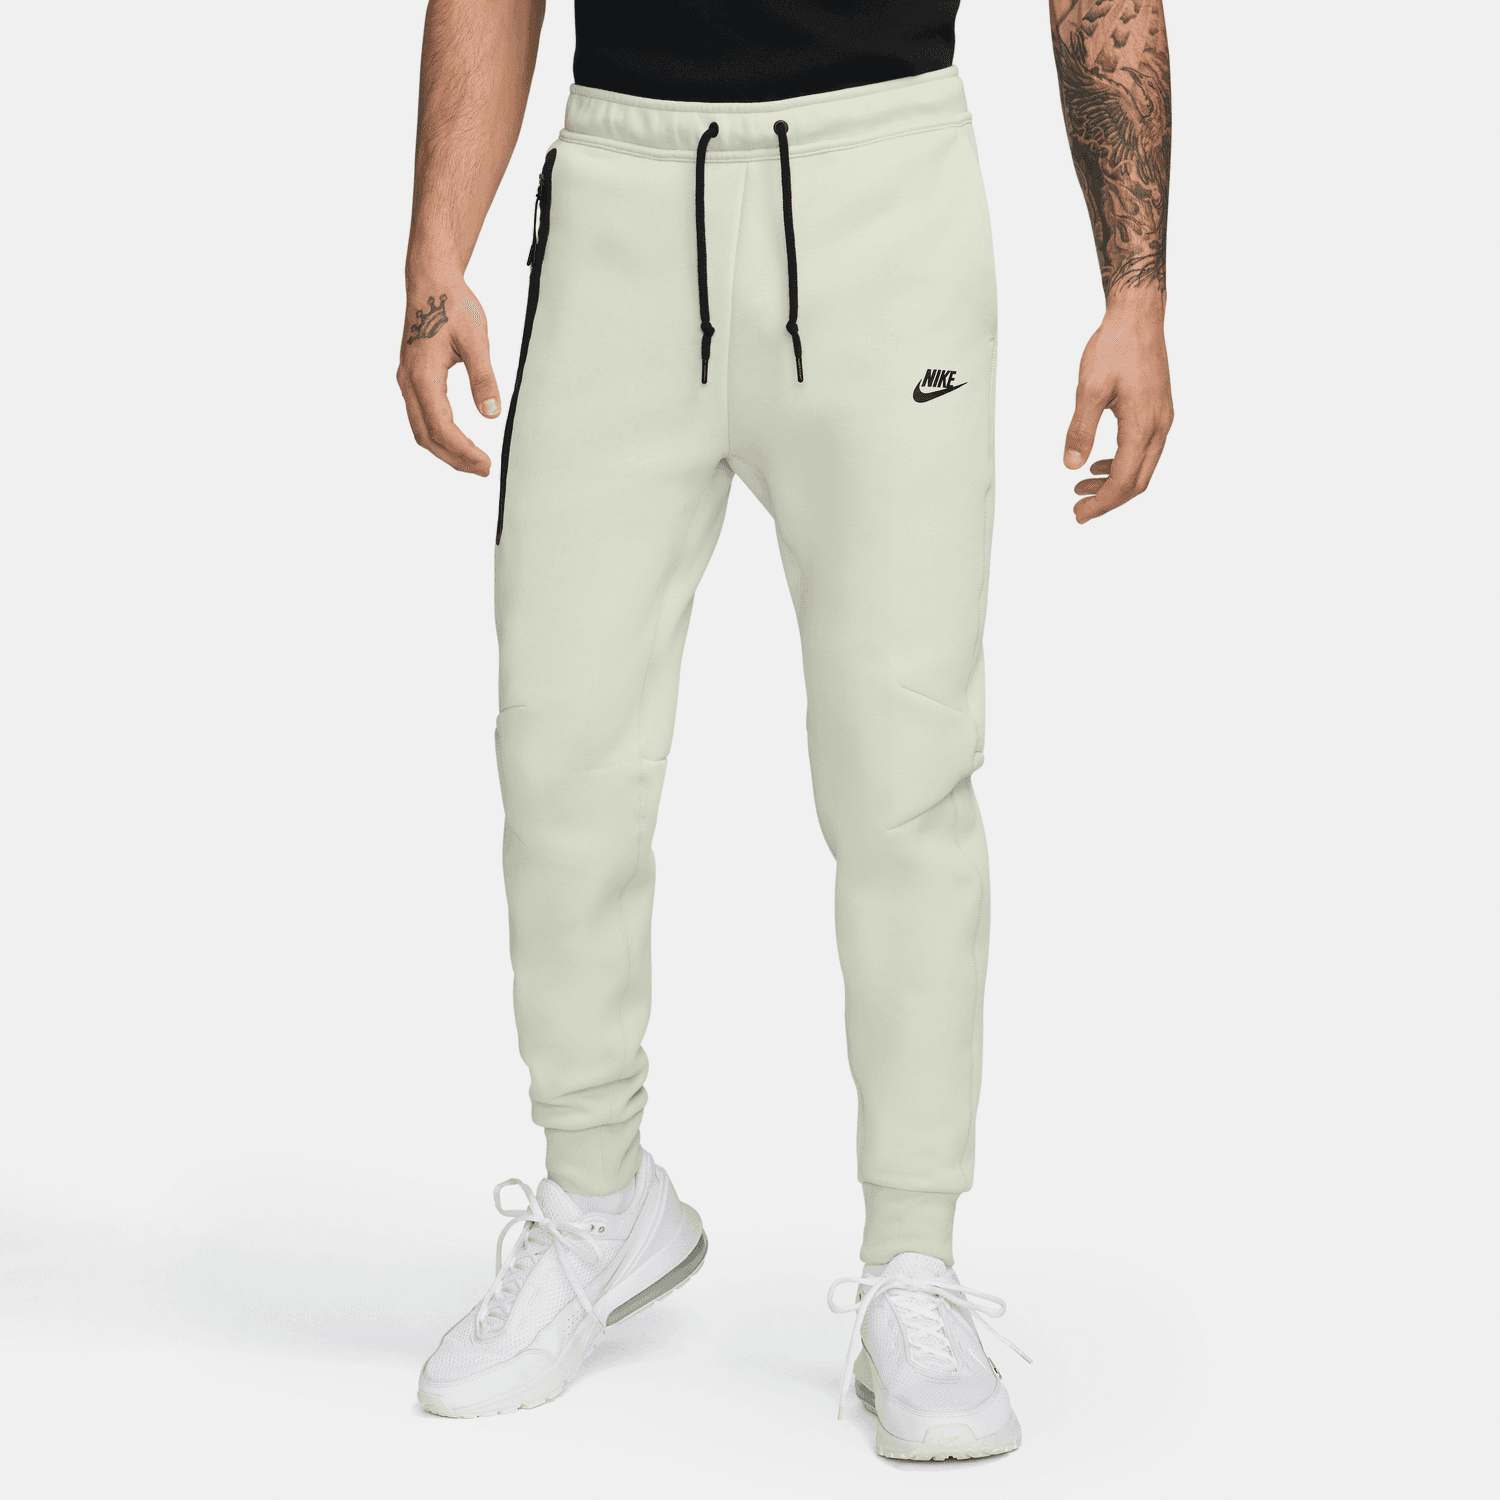 Pantaloni Nike Tech Fleece - Beige/Nero